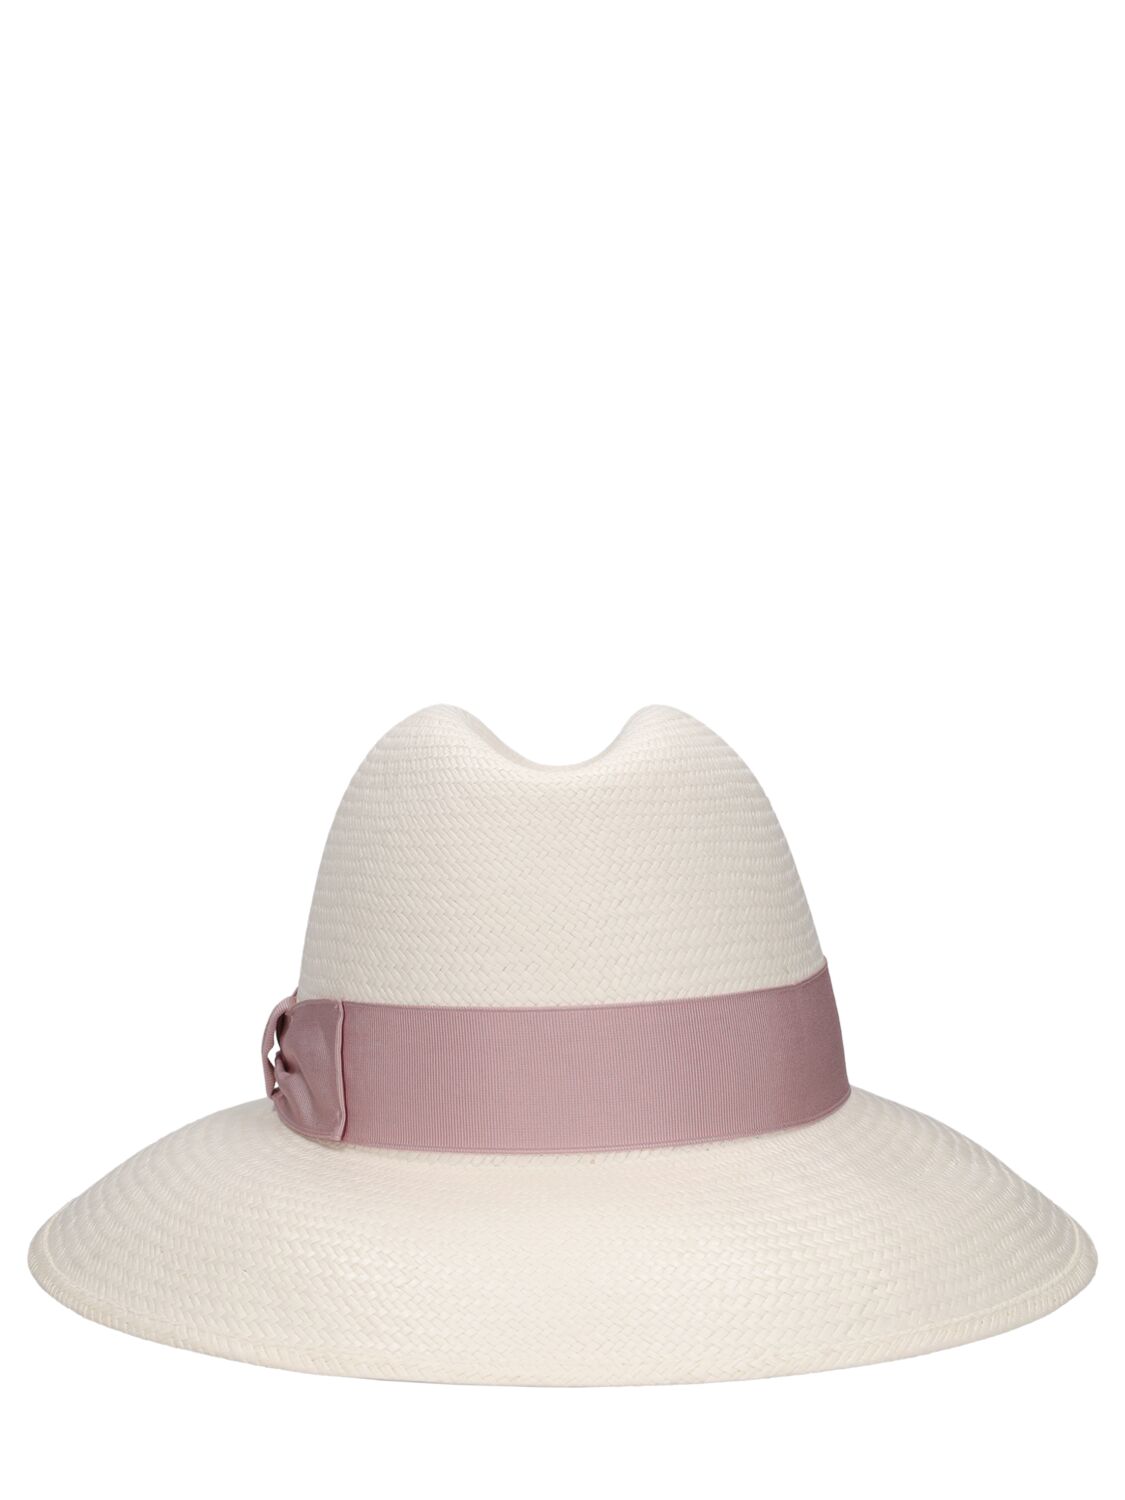 Image of Claudette Fine Straw Panama Hat